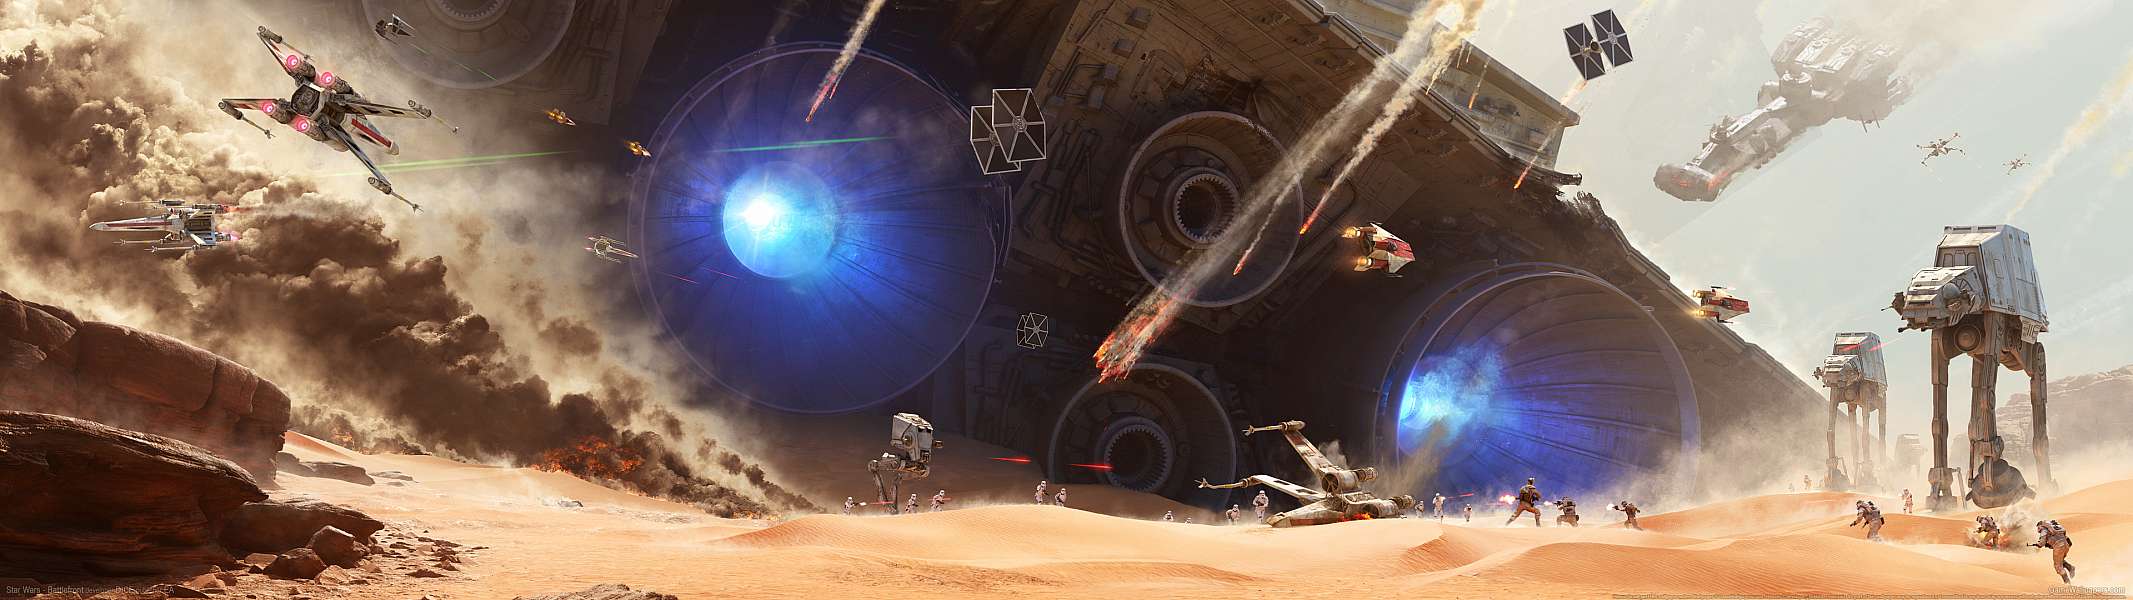 Star Wars - Battlefront dual screen achtergrond